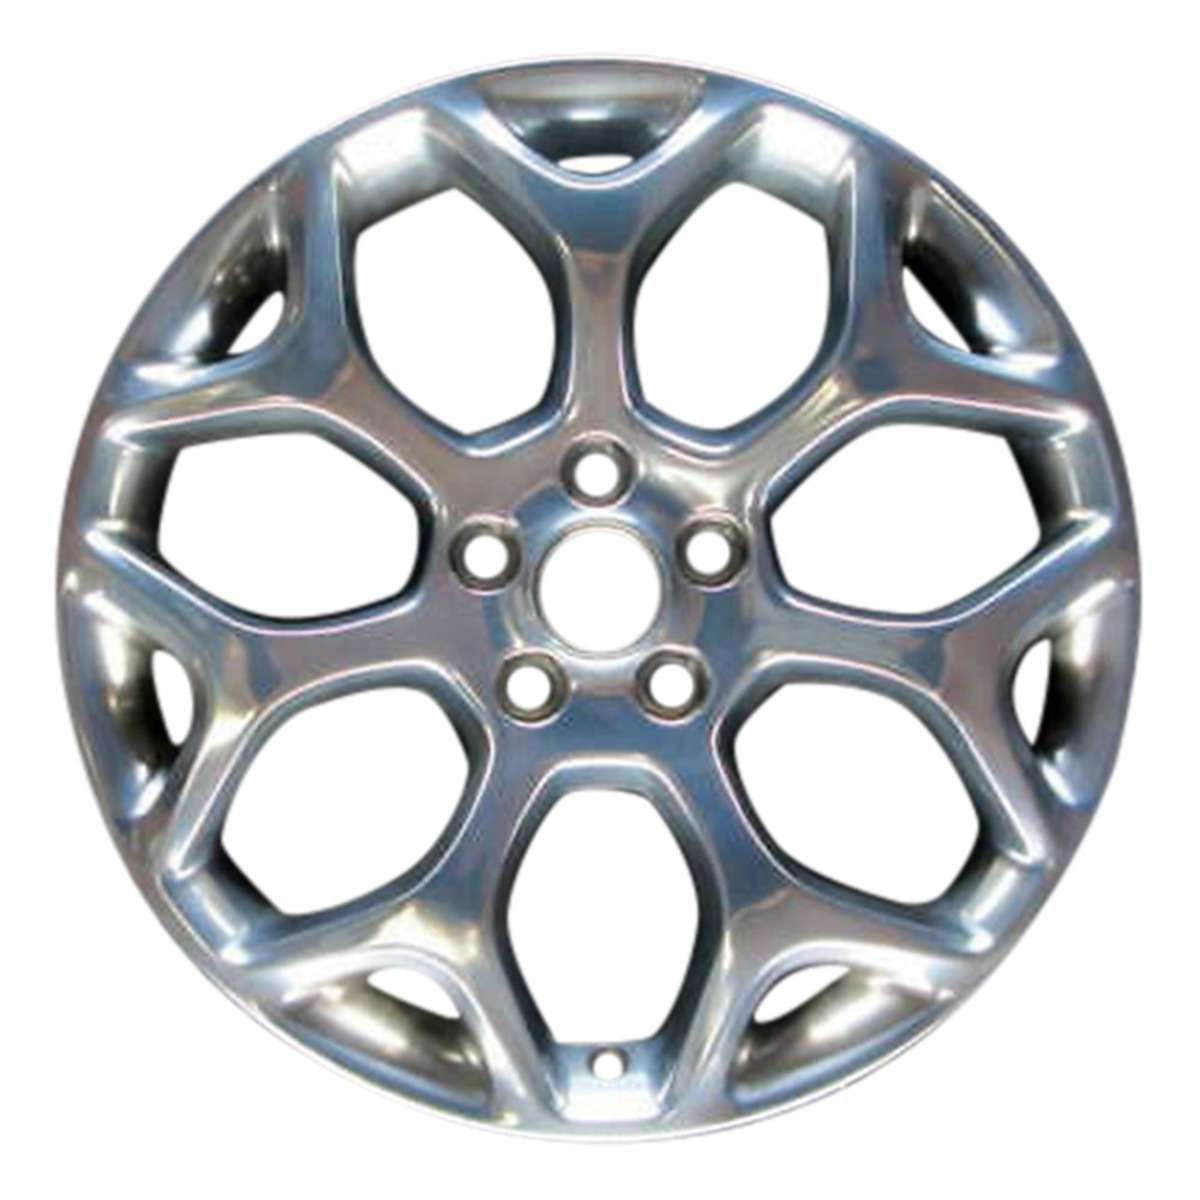 2015 Chrysler 300 20" OEM Wheel Rim W2539P